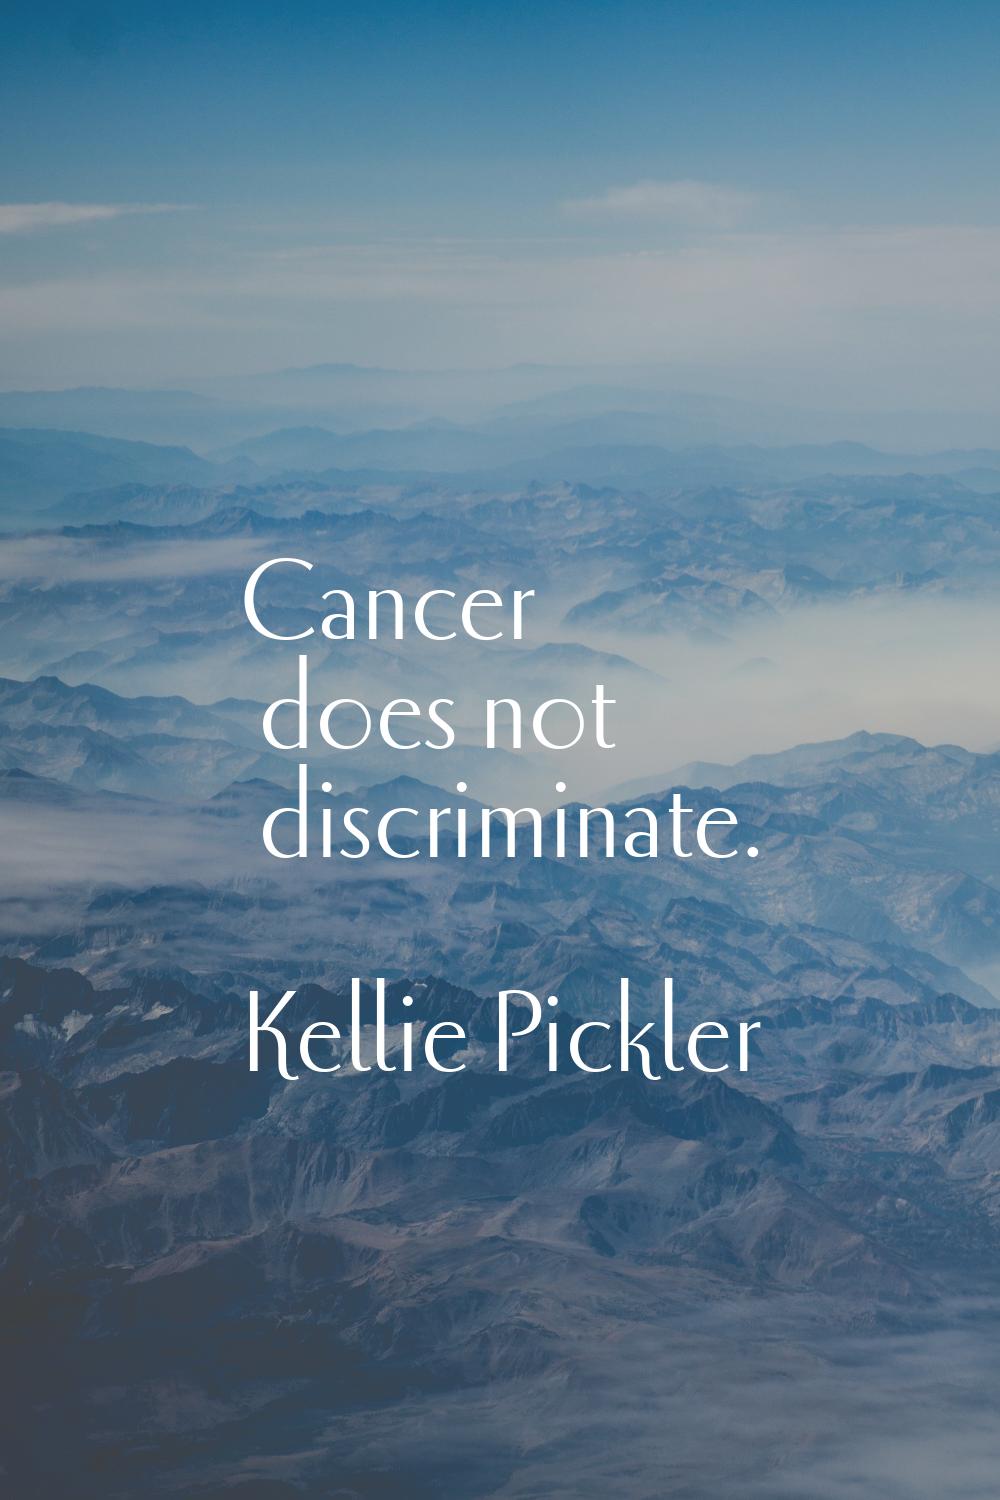 Cancer does not discriminate.